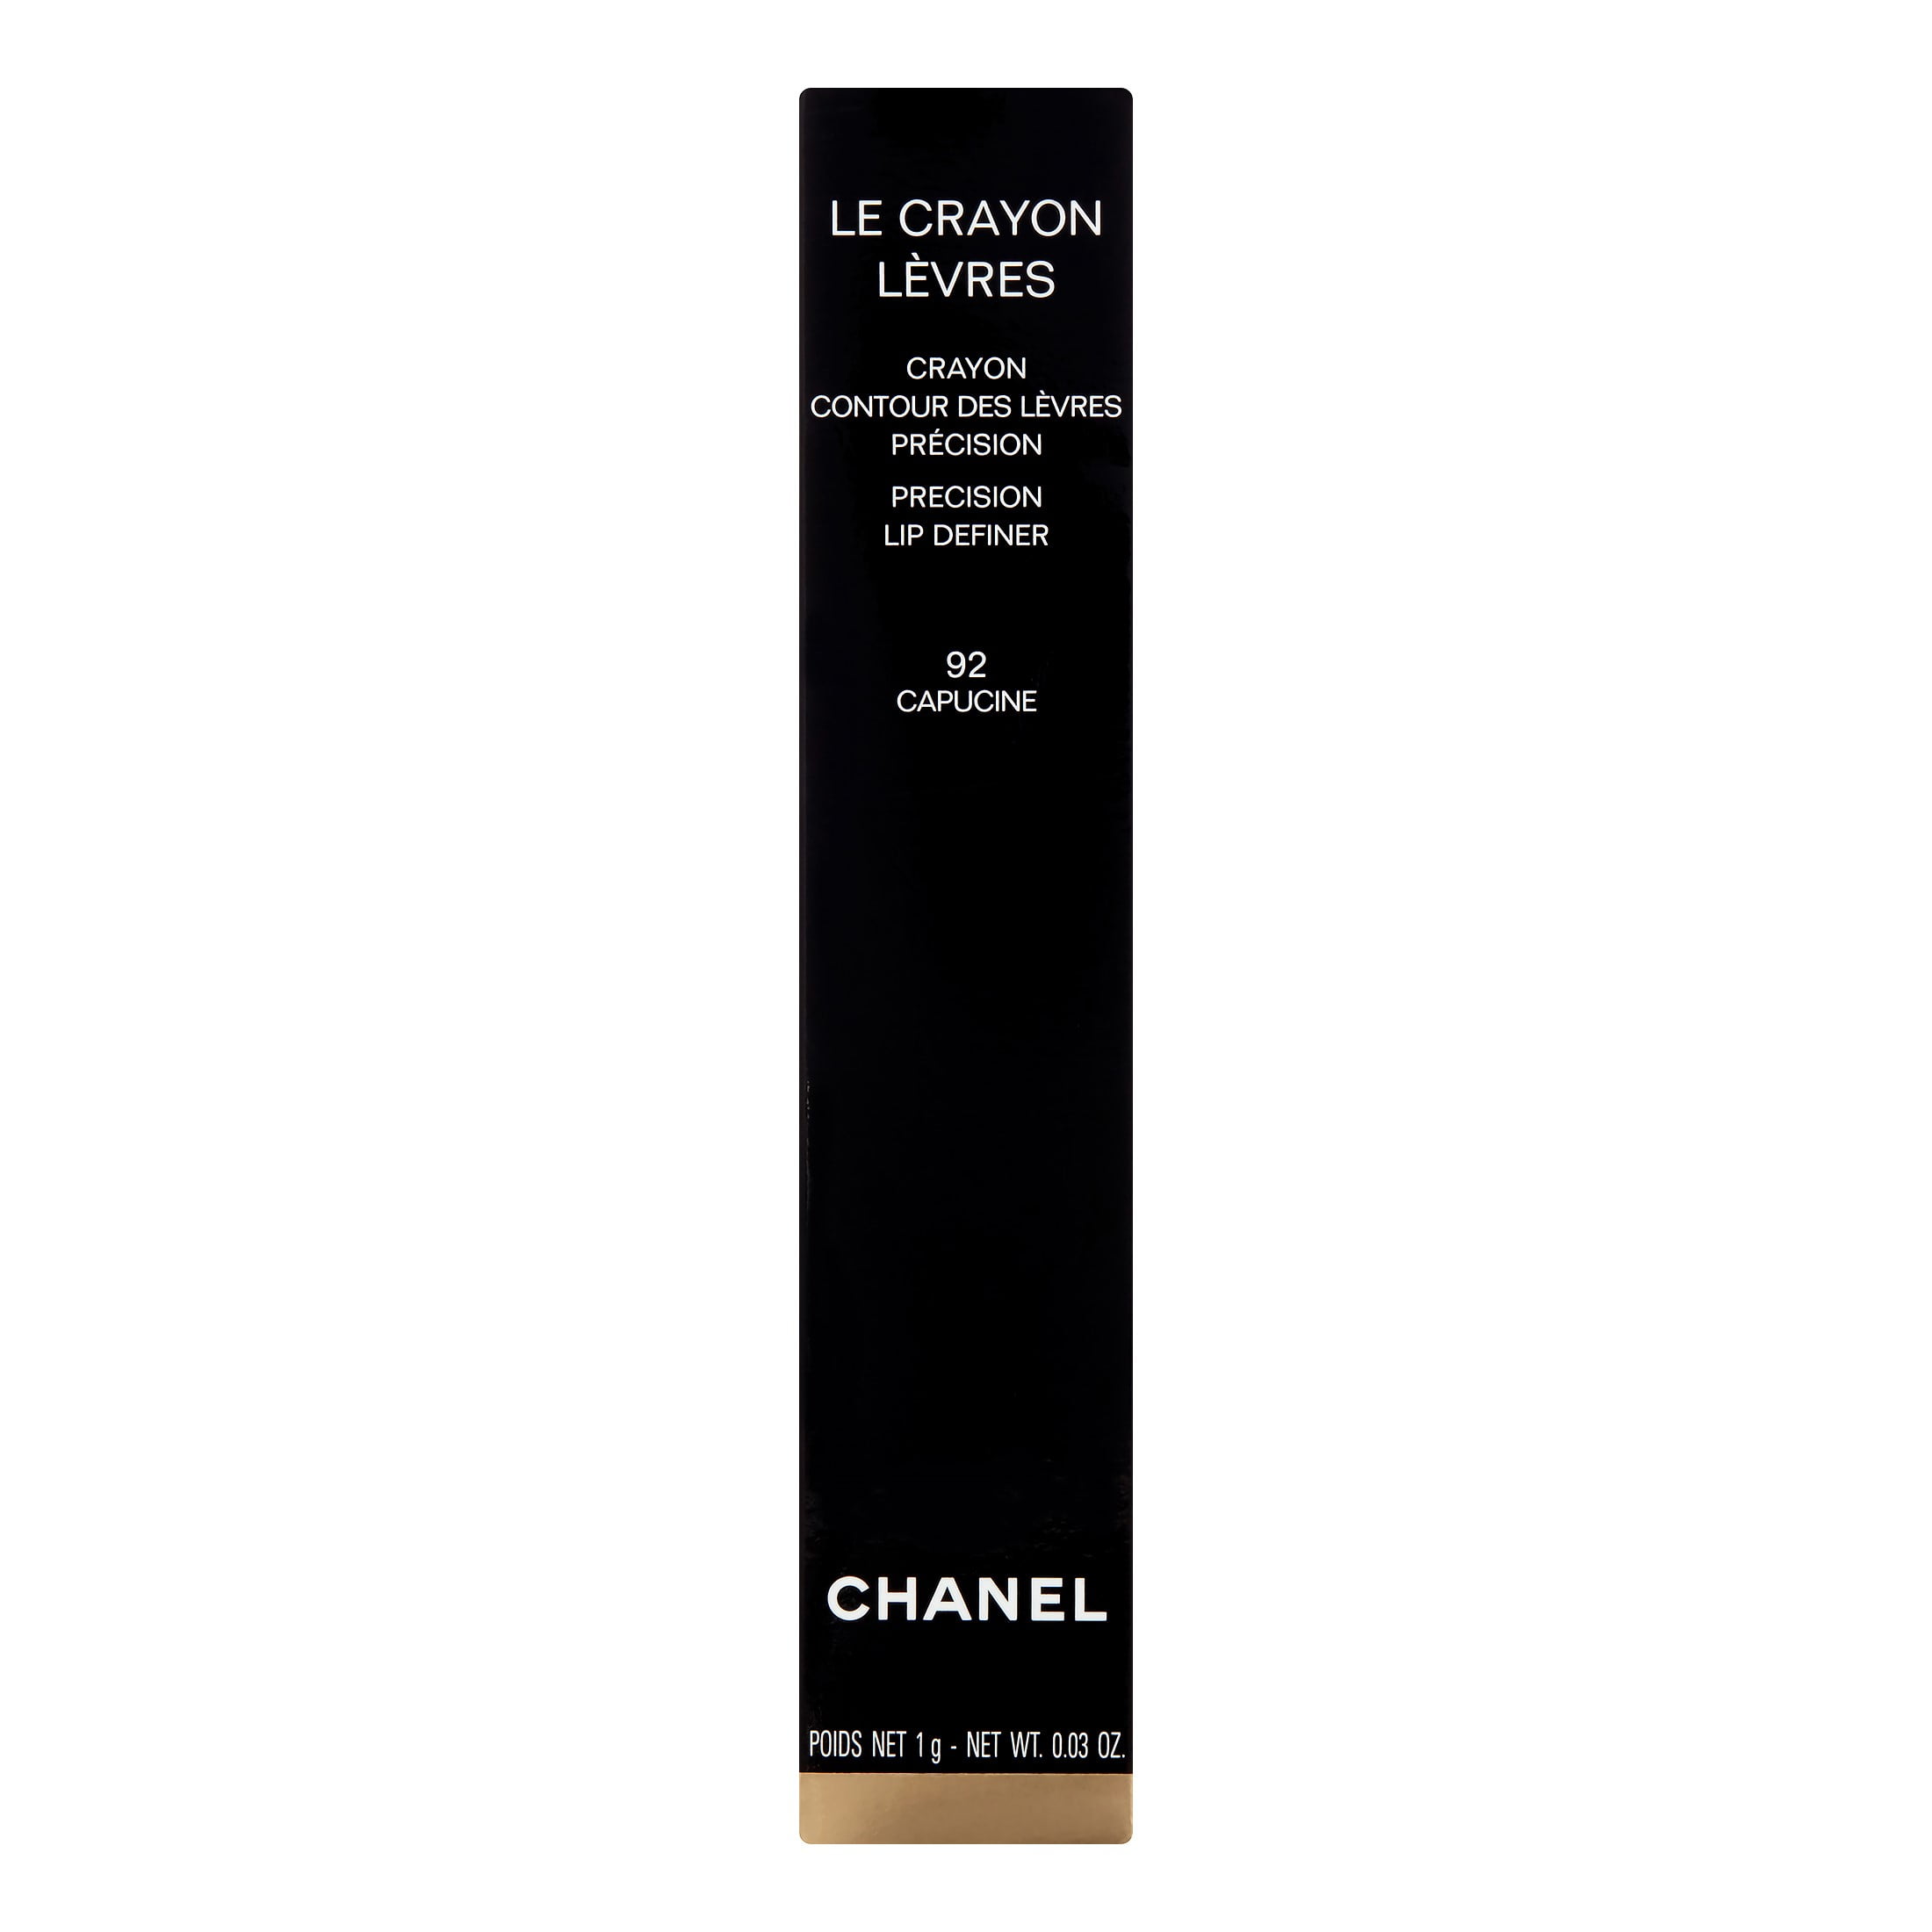 Chanel Le Crayon Lèvres precise lip pencil with sharpener shade